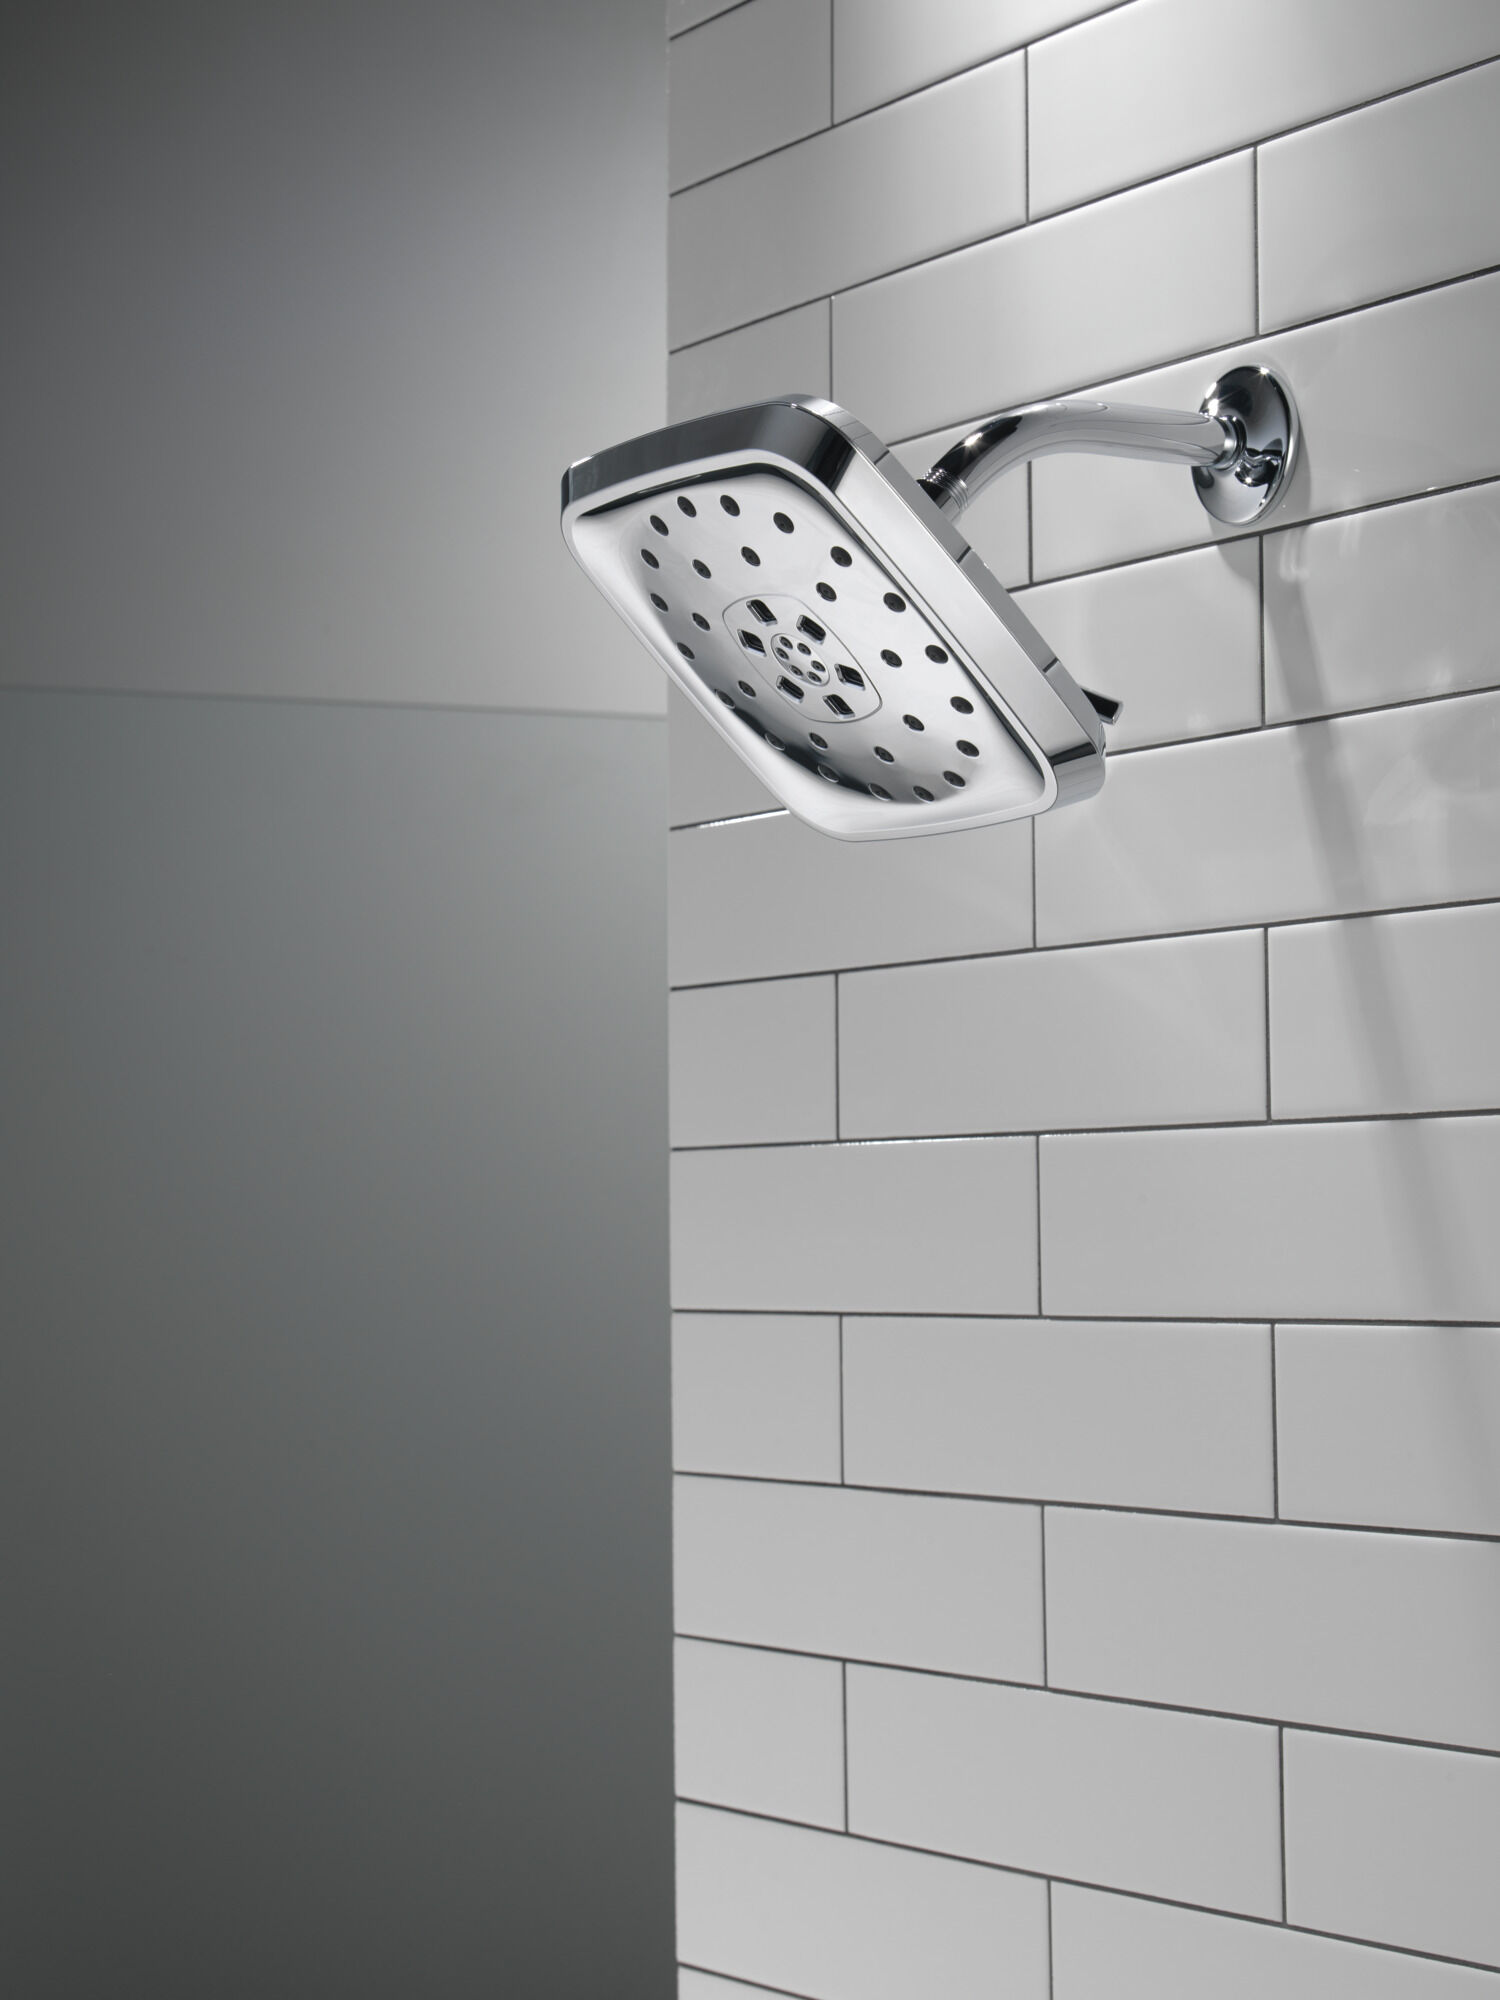 H2Okinetic® 4-Setting Shower Head with UltraSoak™